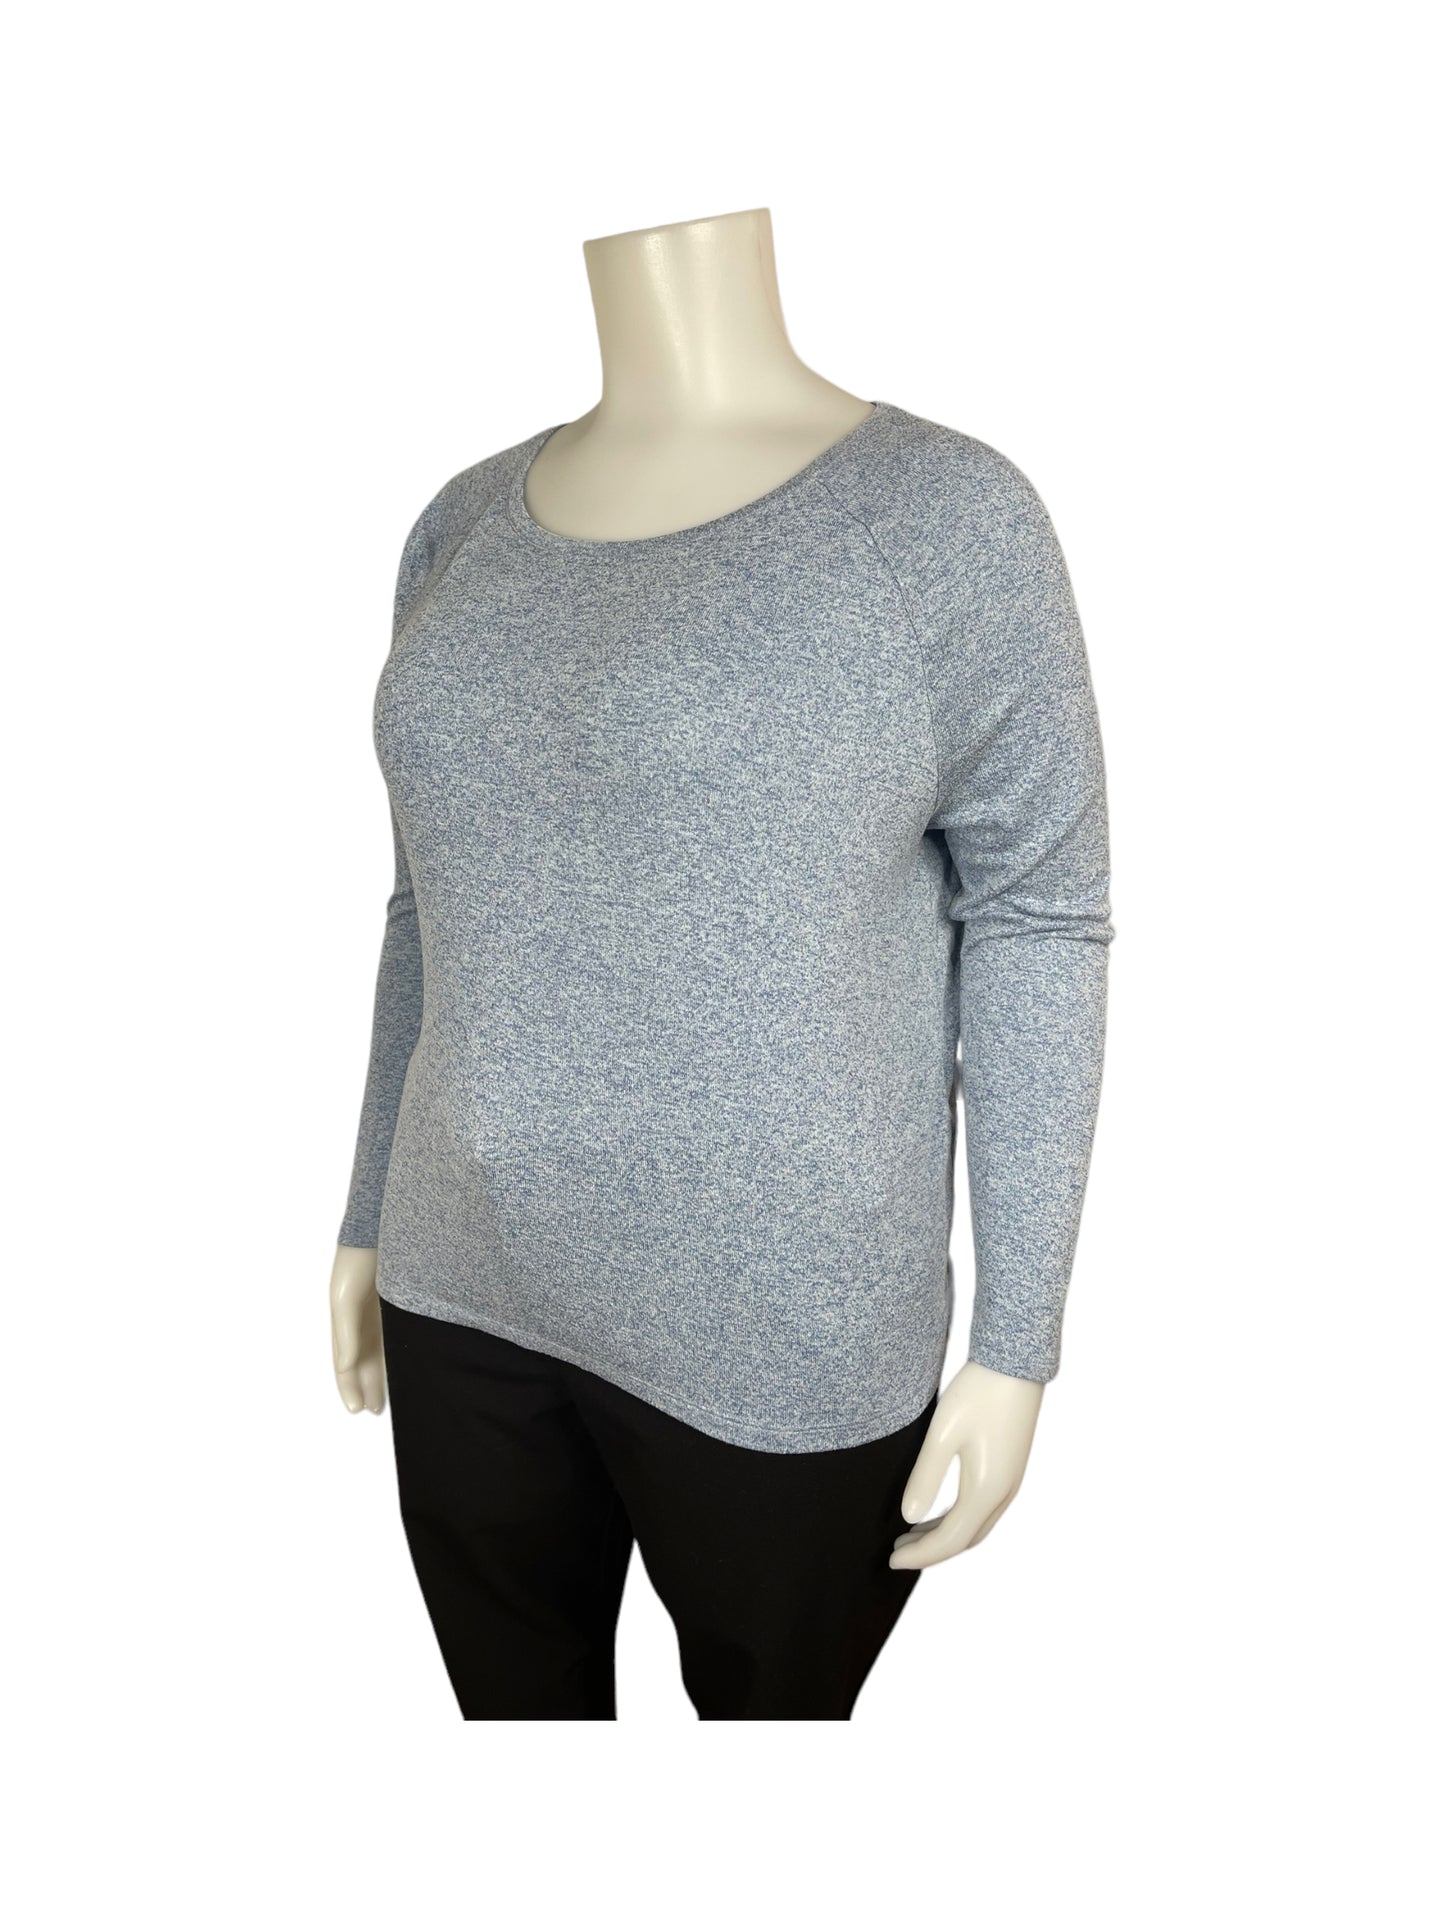 “Old Navy” Blue-Grey Sweater (XL)